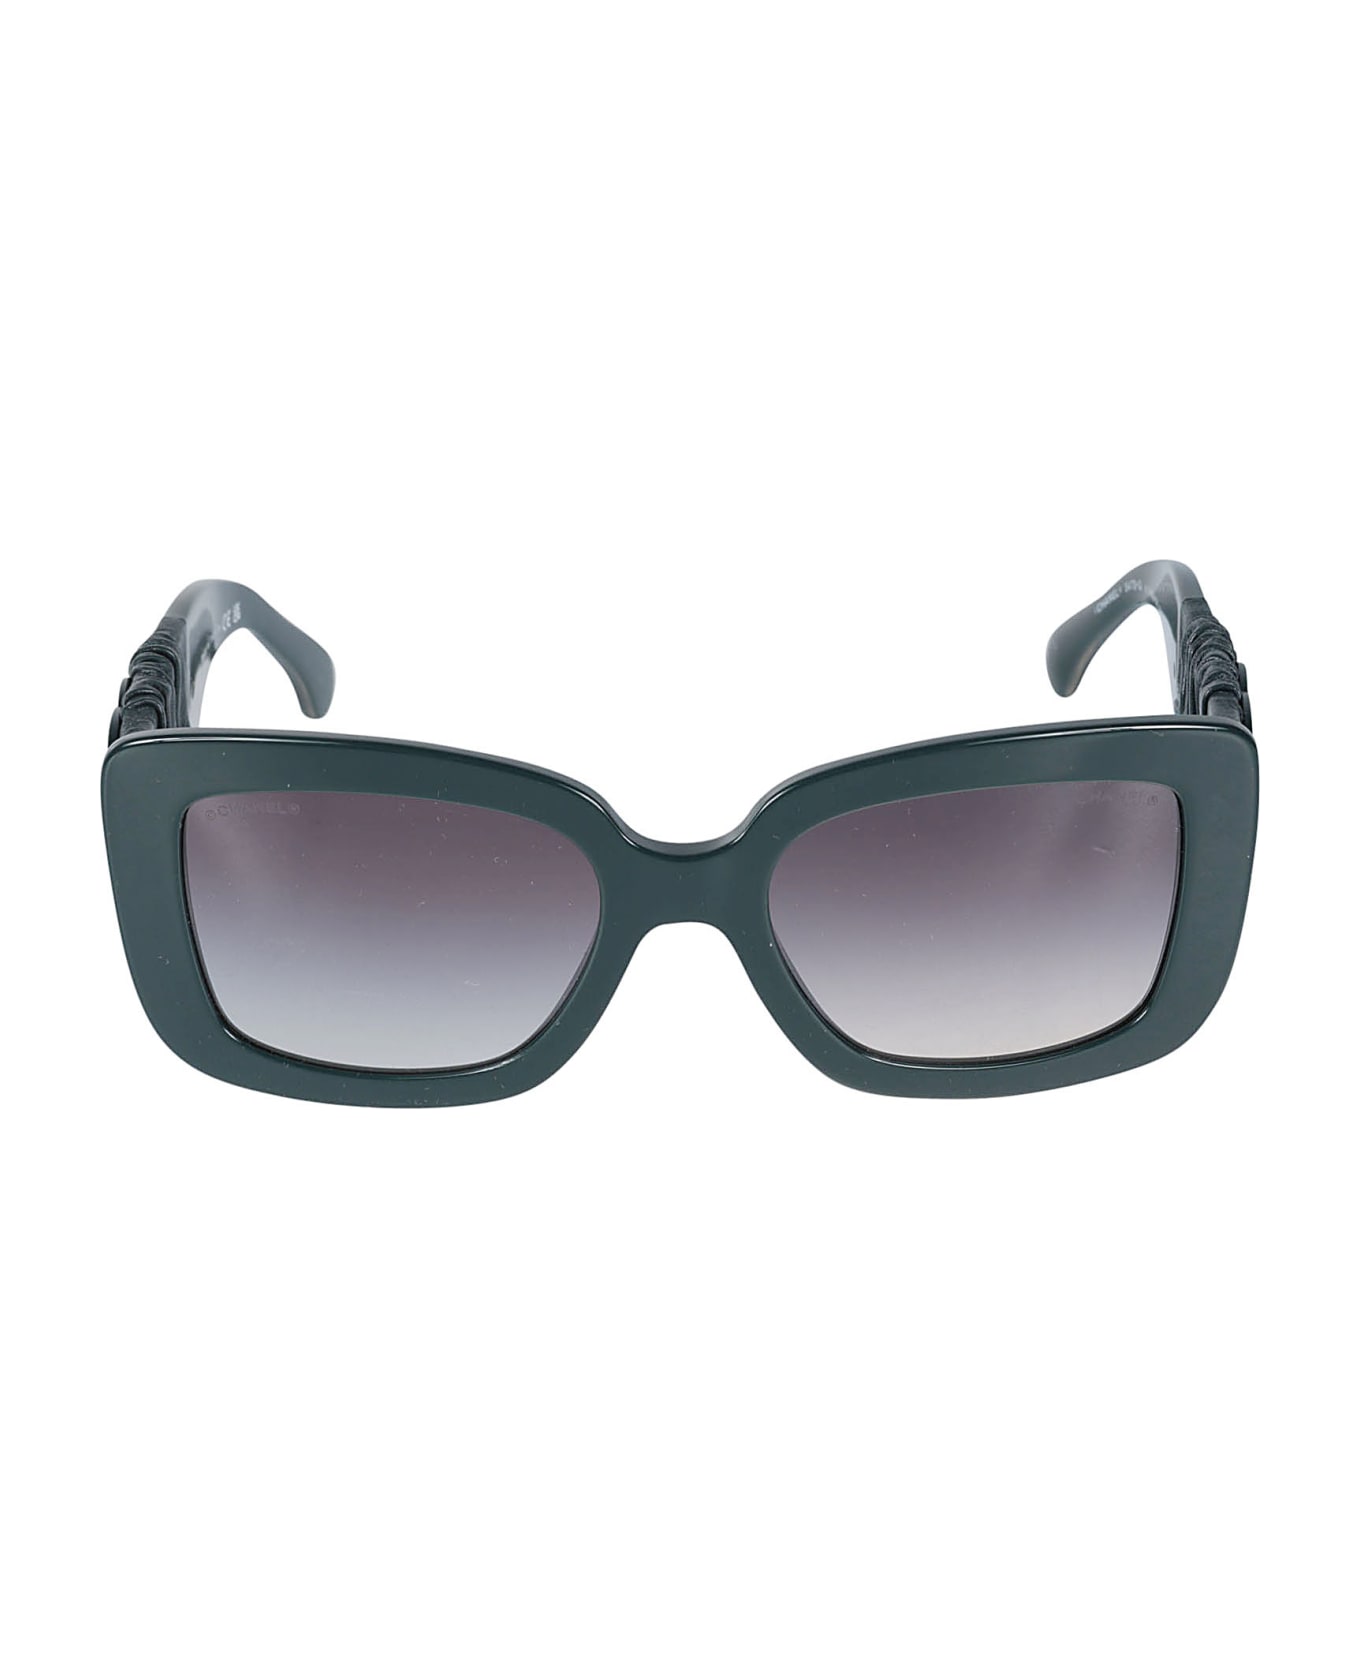 Chanel Square Frame Sunglasses - 1459s6 サングラス